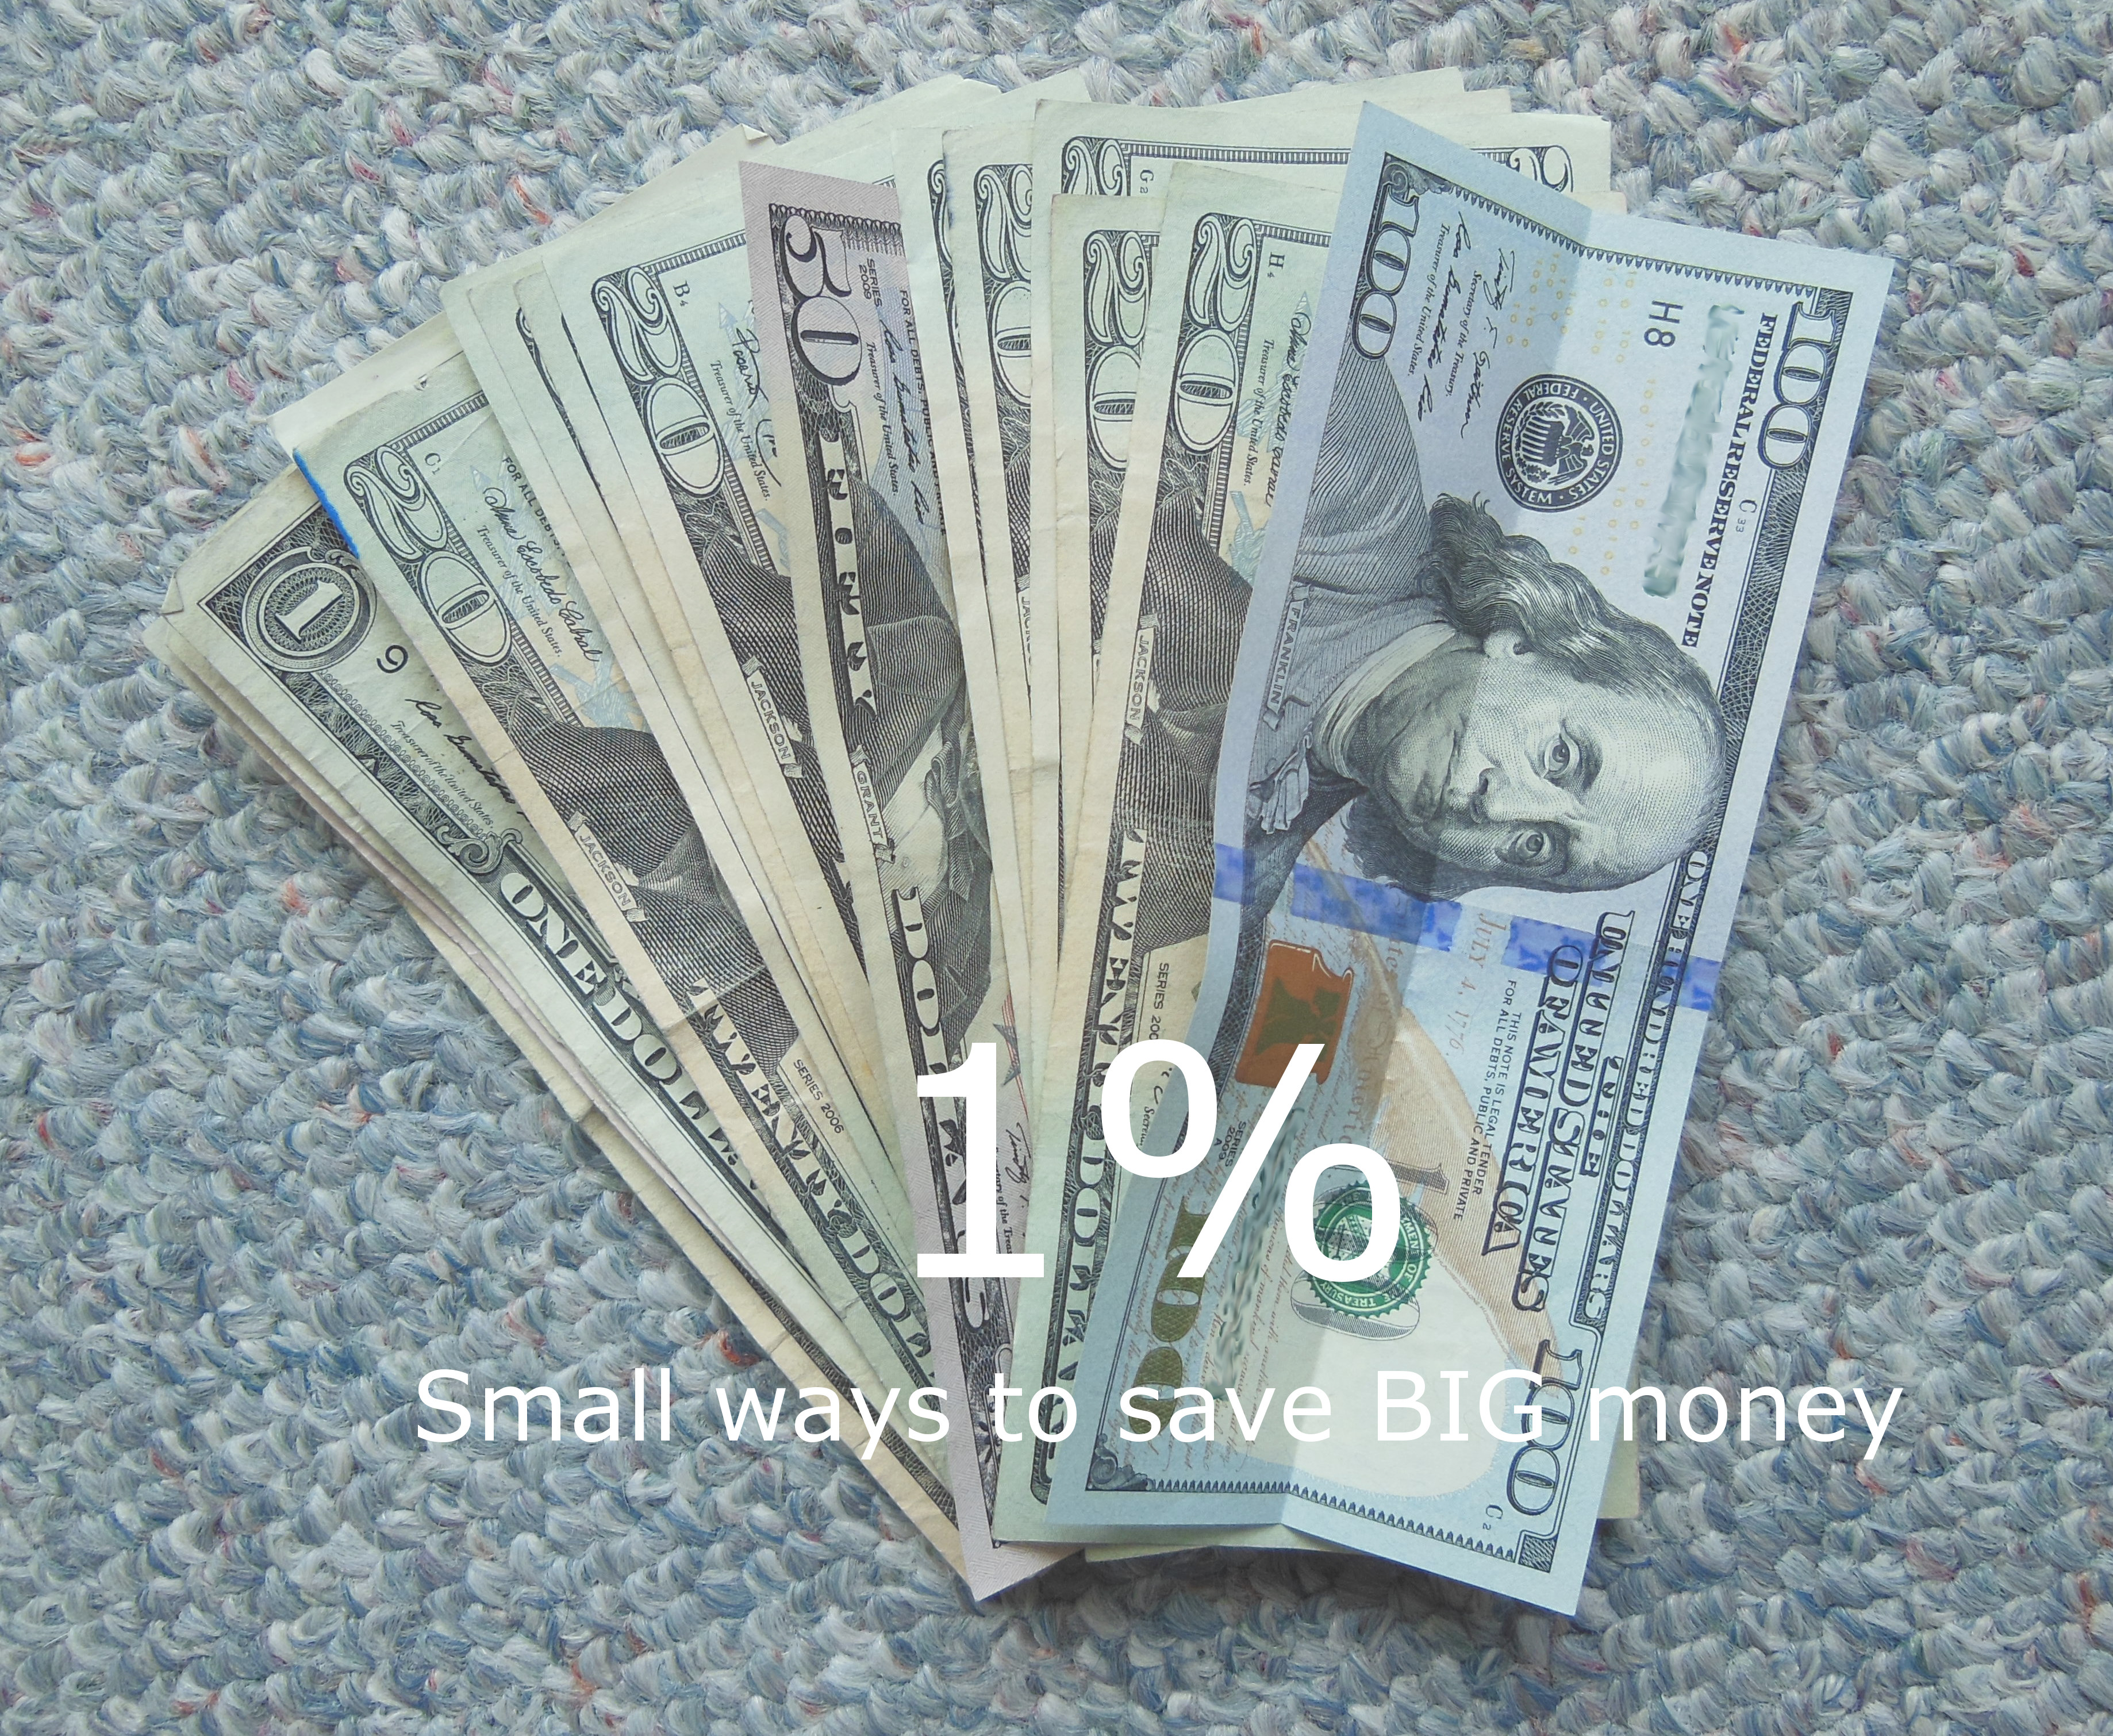 www.theGenuineGentleman.com 1% savings - ways to save money - practical methods for BIG savings